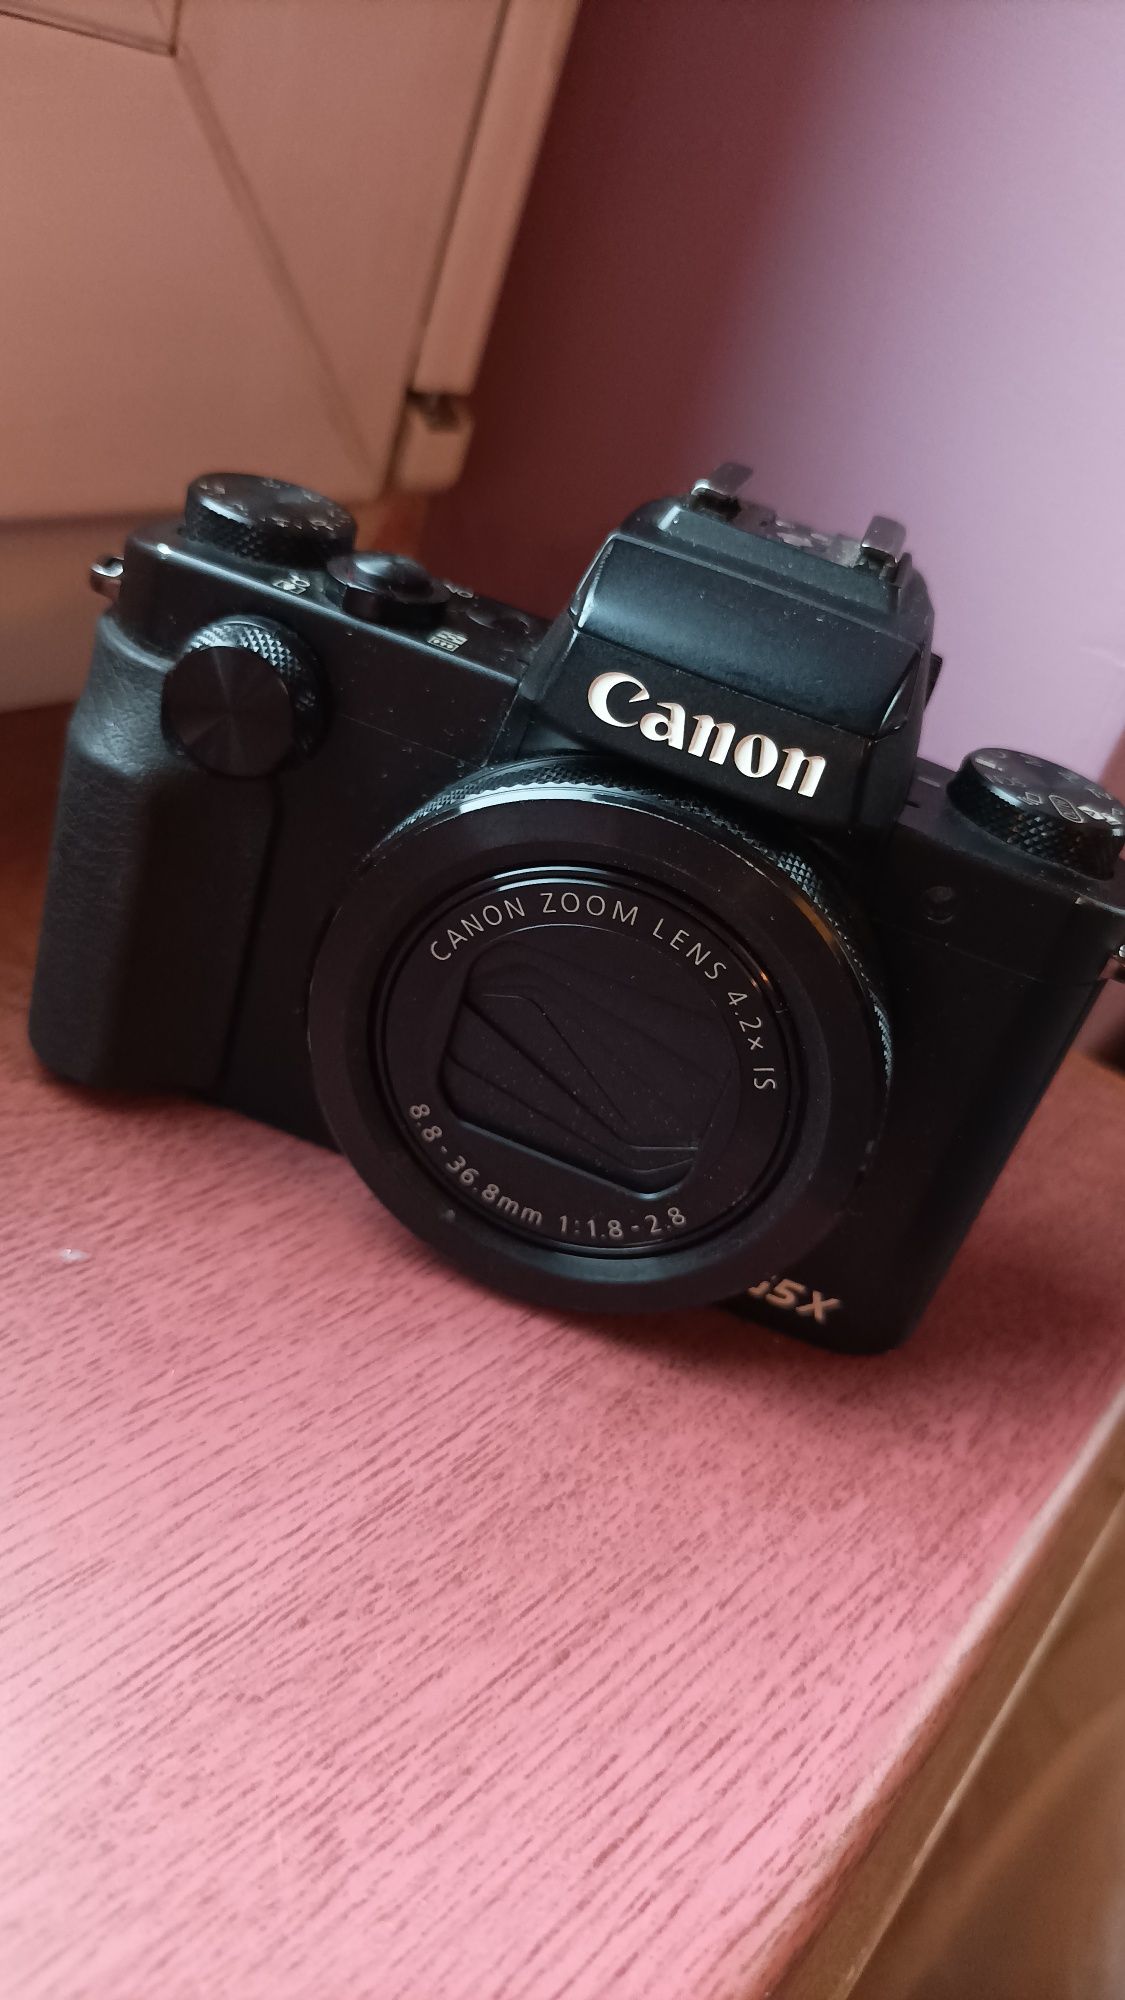 Canon g5x aparat fotograficzny